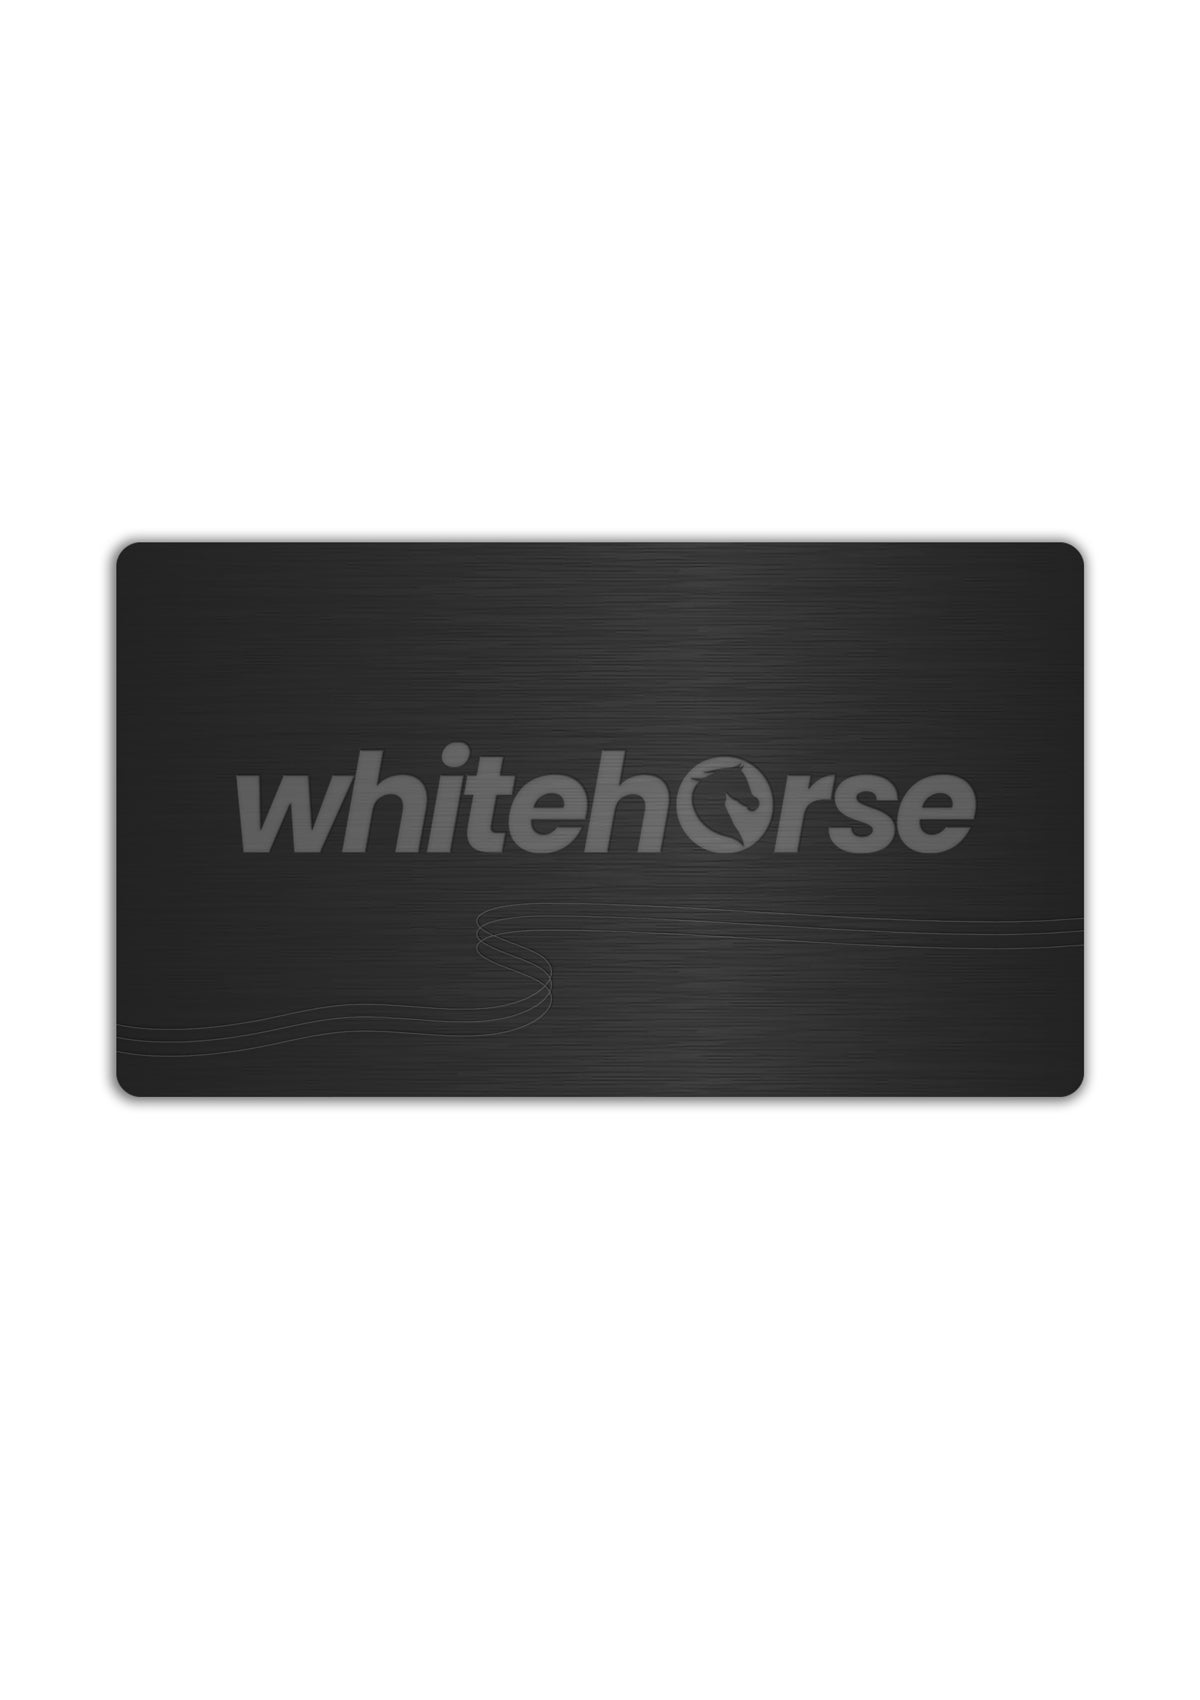 Whitehorse e-Gift Card - White Horse Active